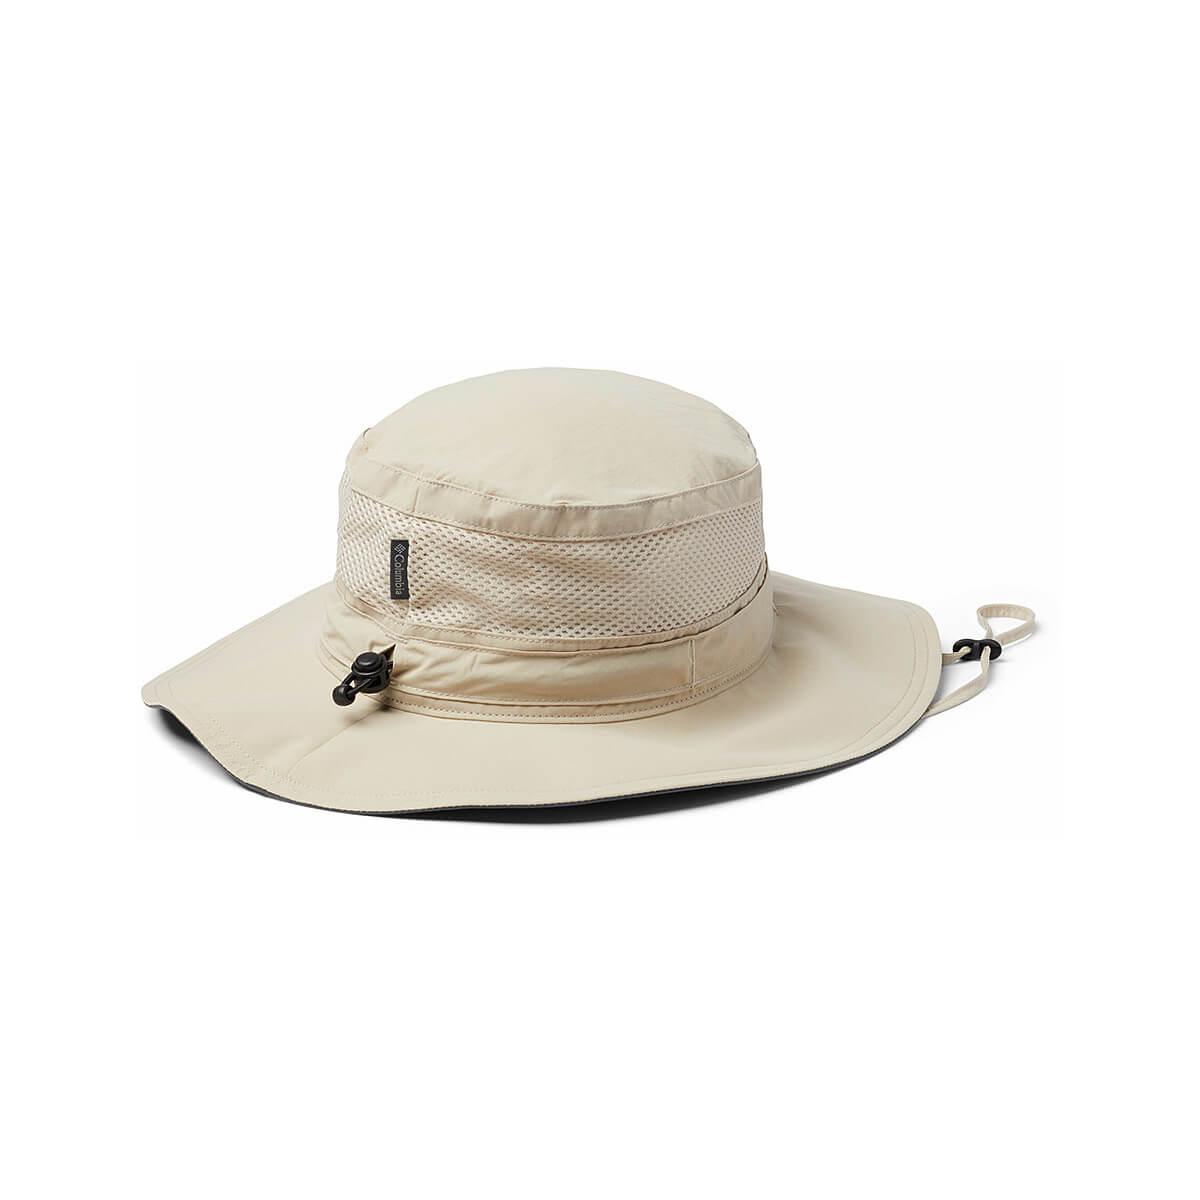  Bora Bora Ii Booney Hat